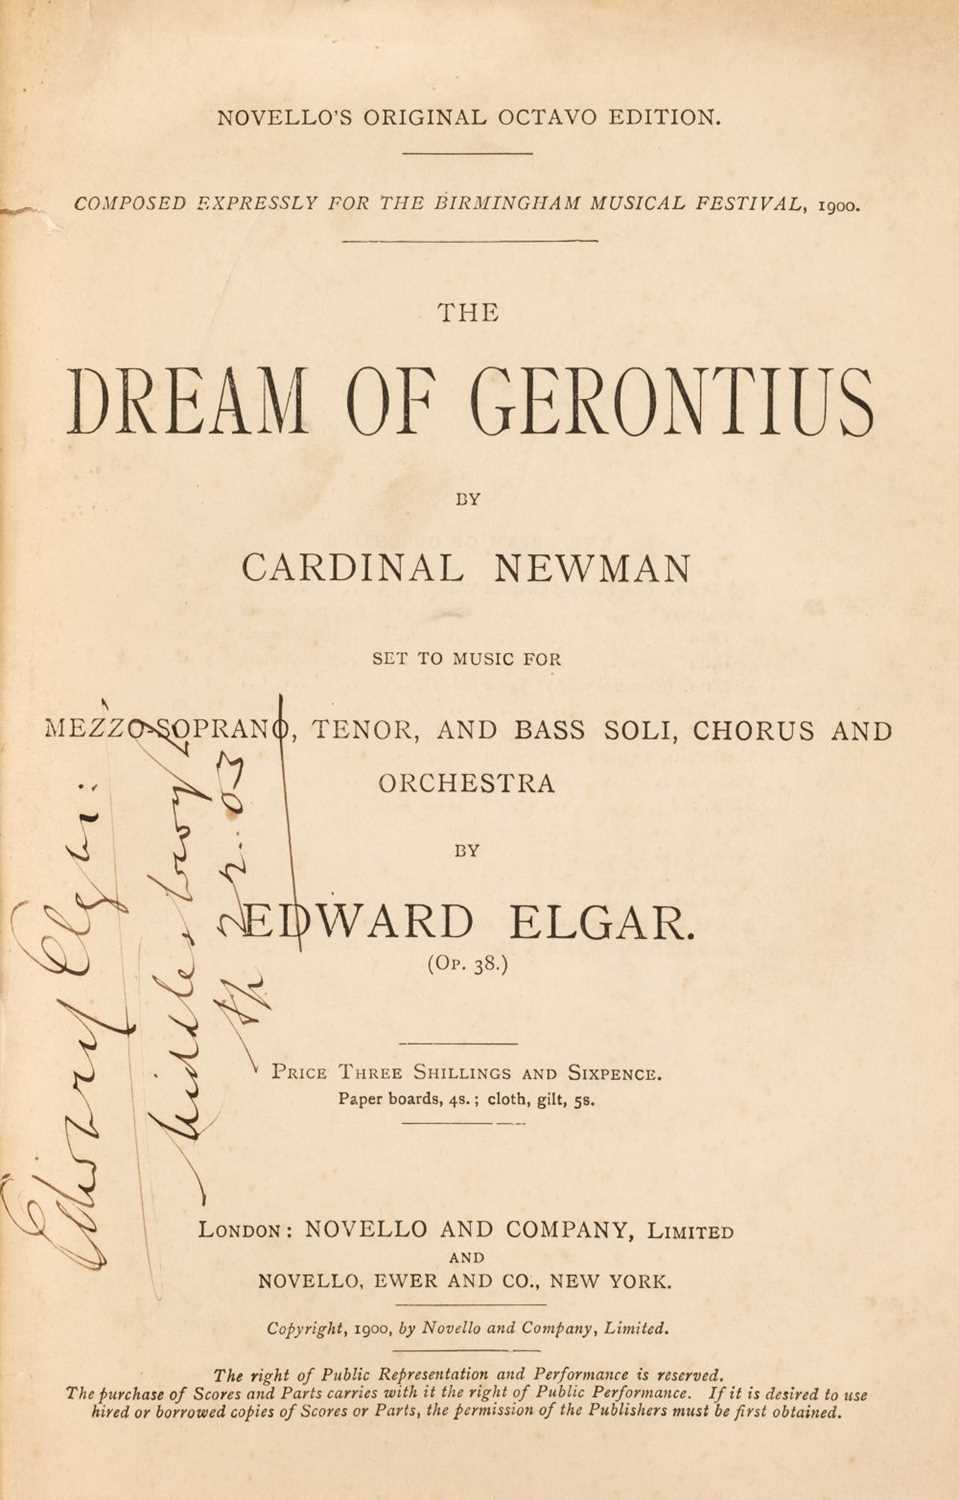 Lot 331 - Elgar (Edward, 1857-1934). Signed score of The Dream of Gerontius